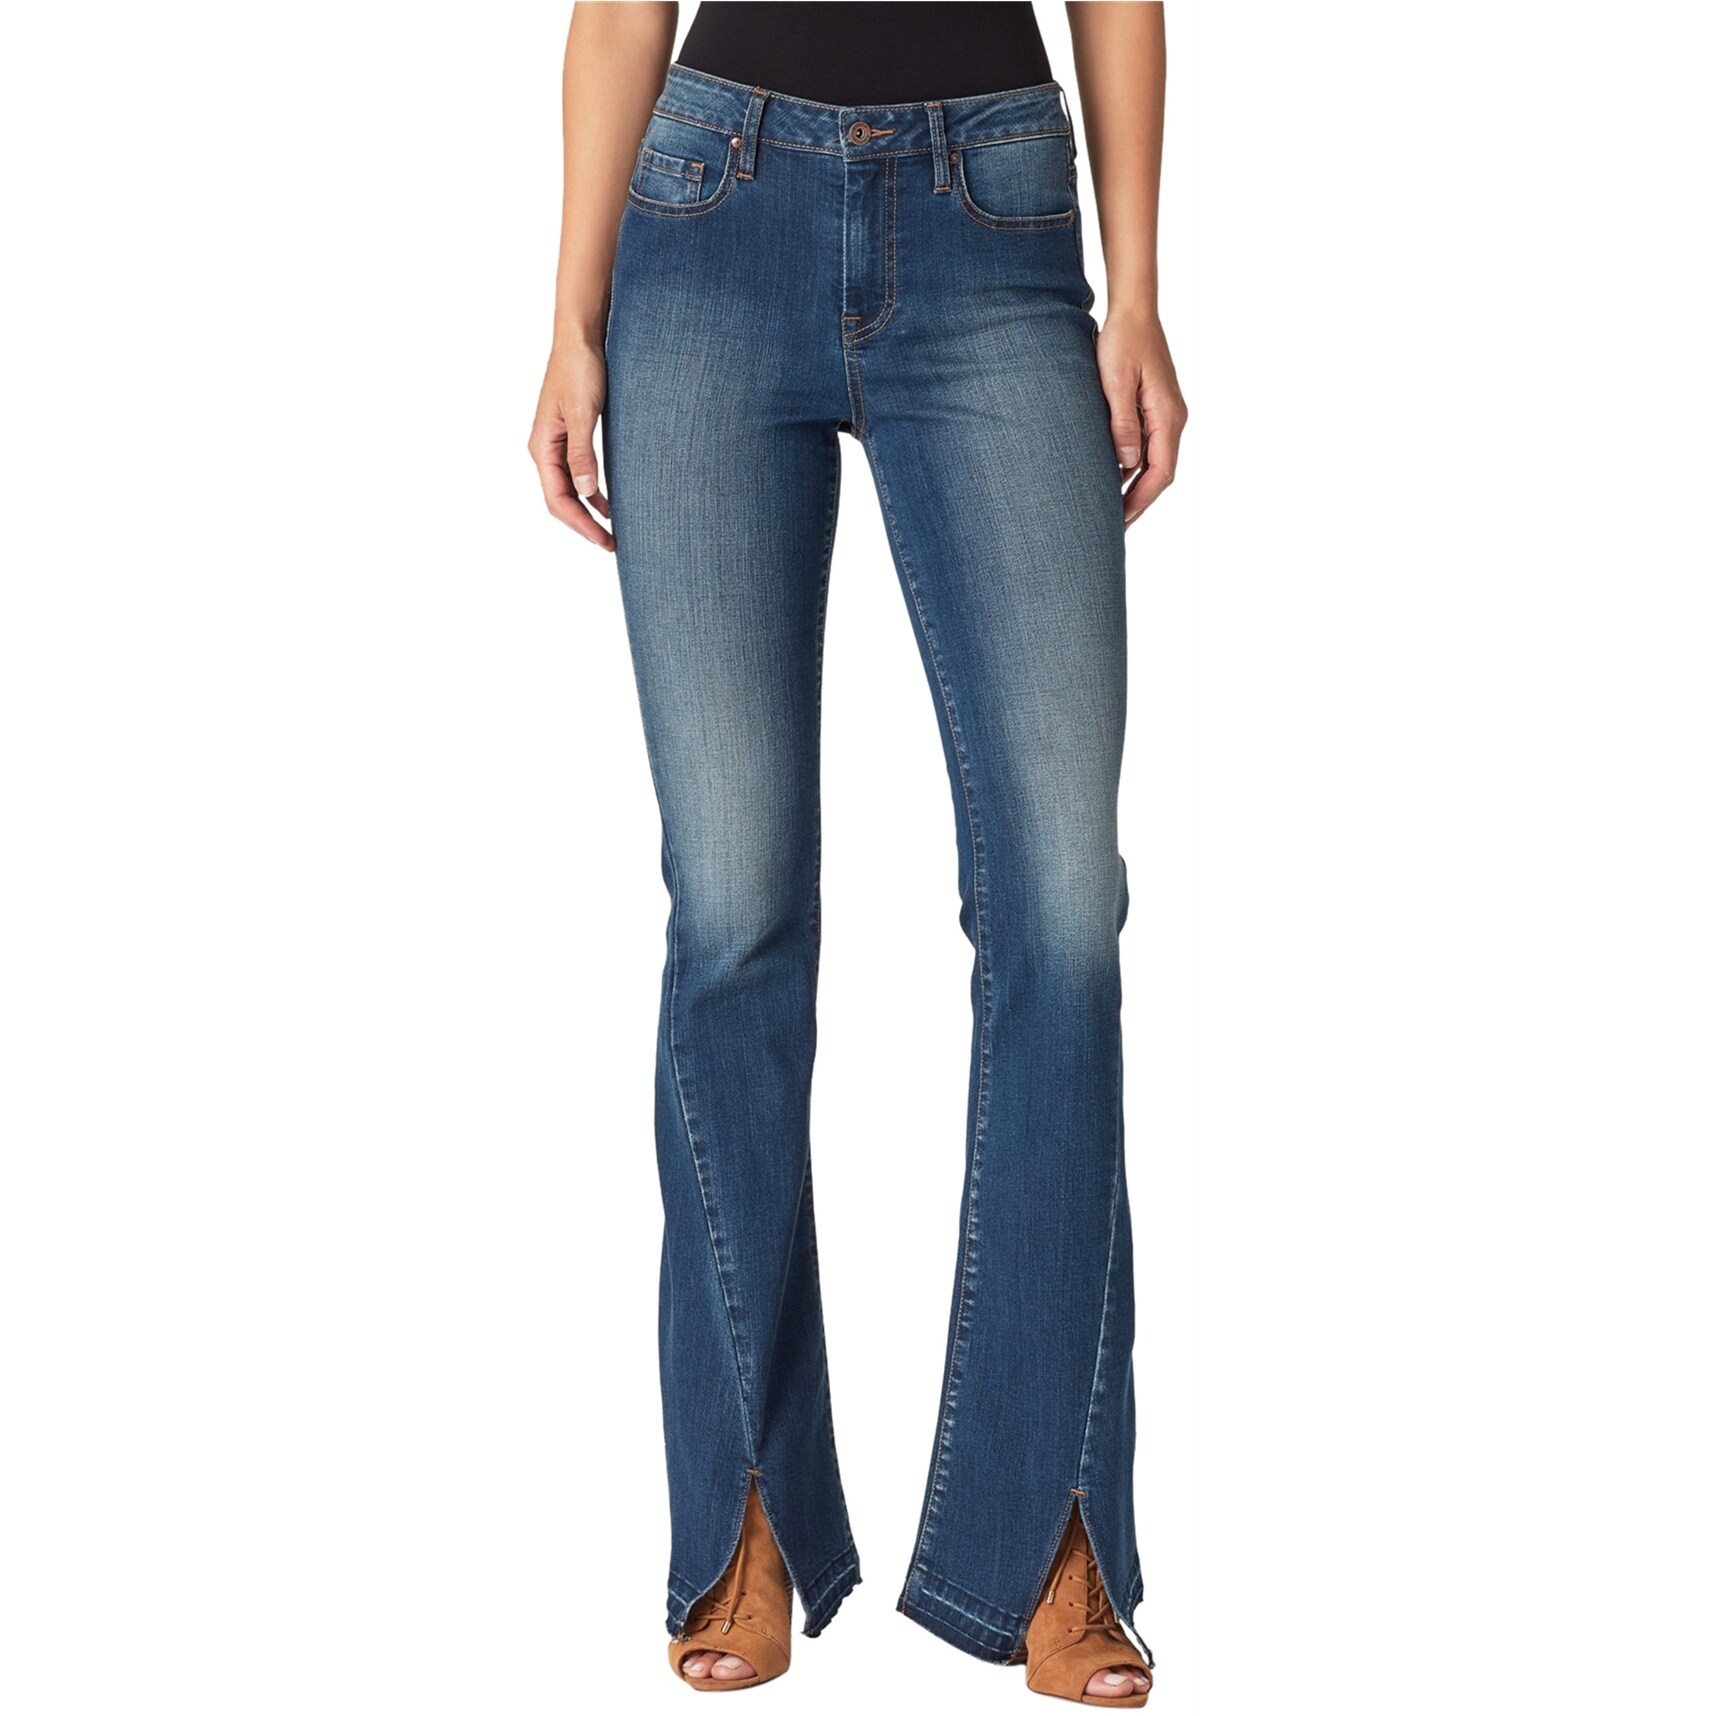 jessica simpson flare jeans